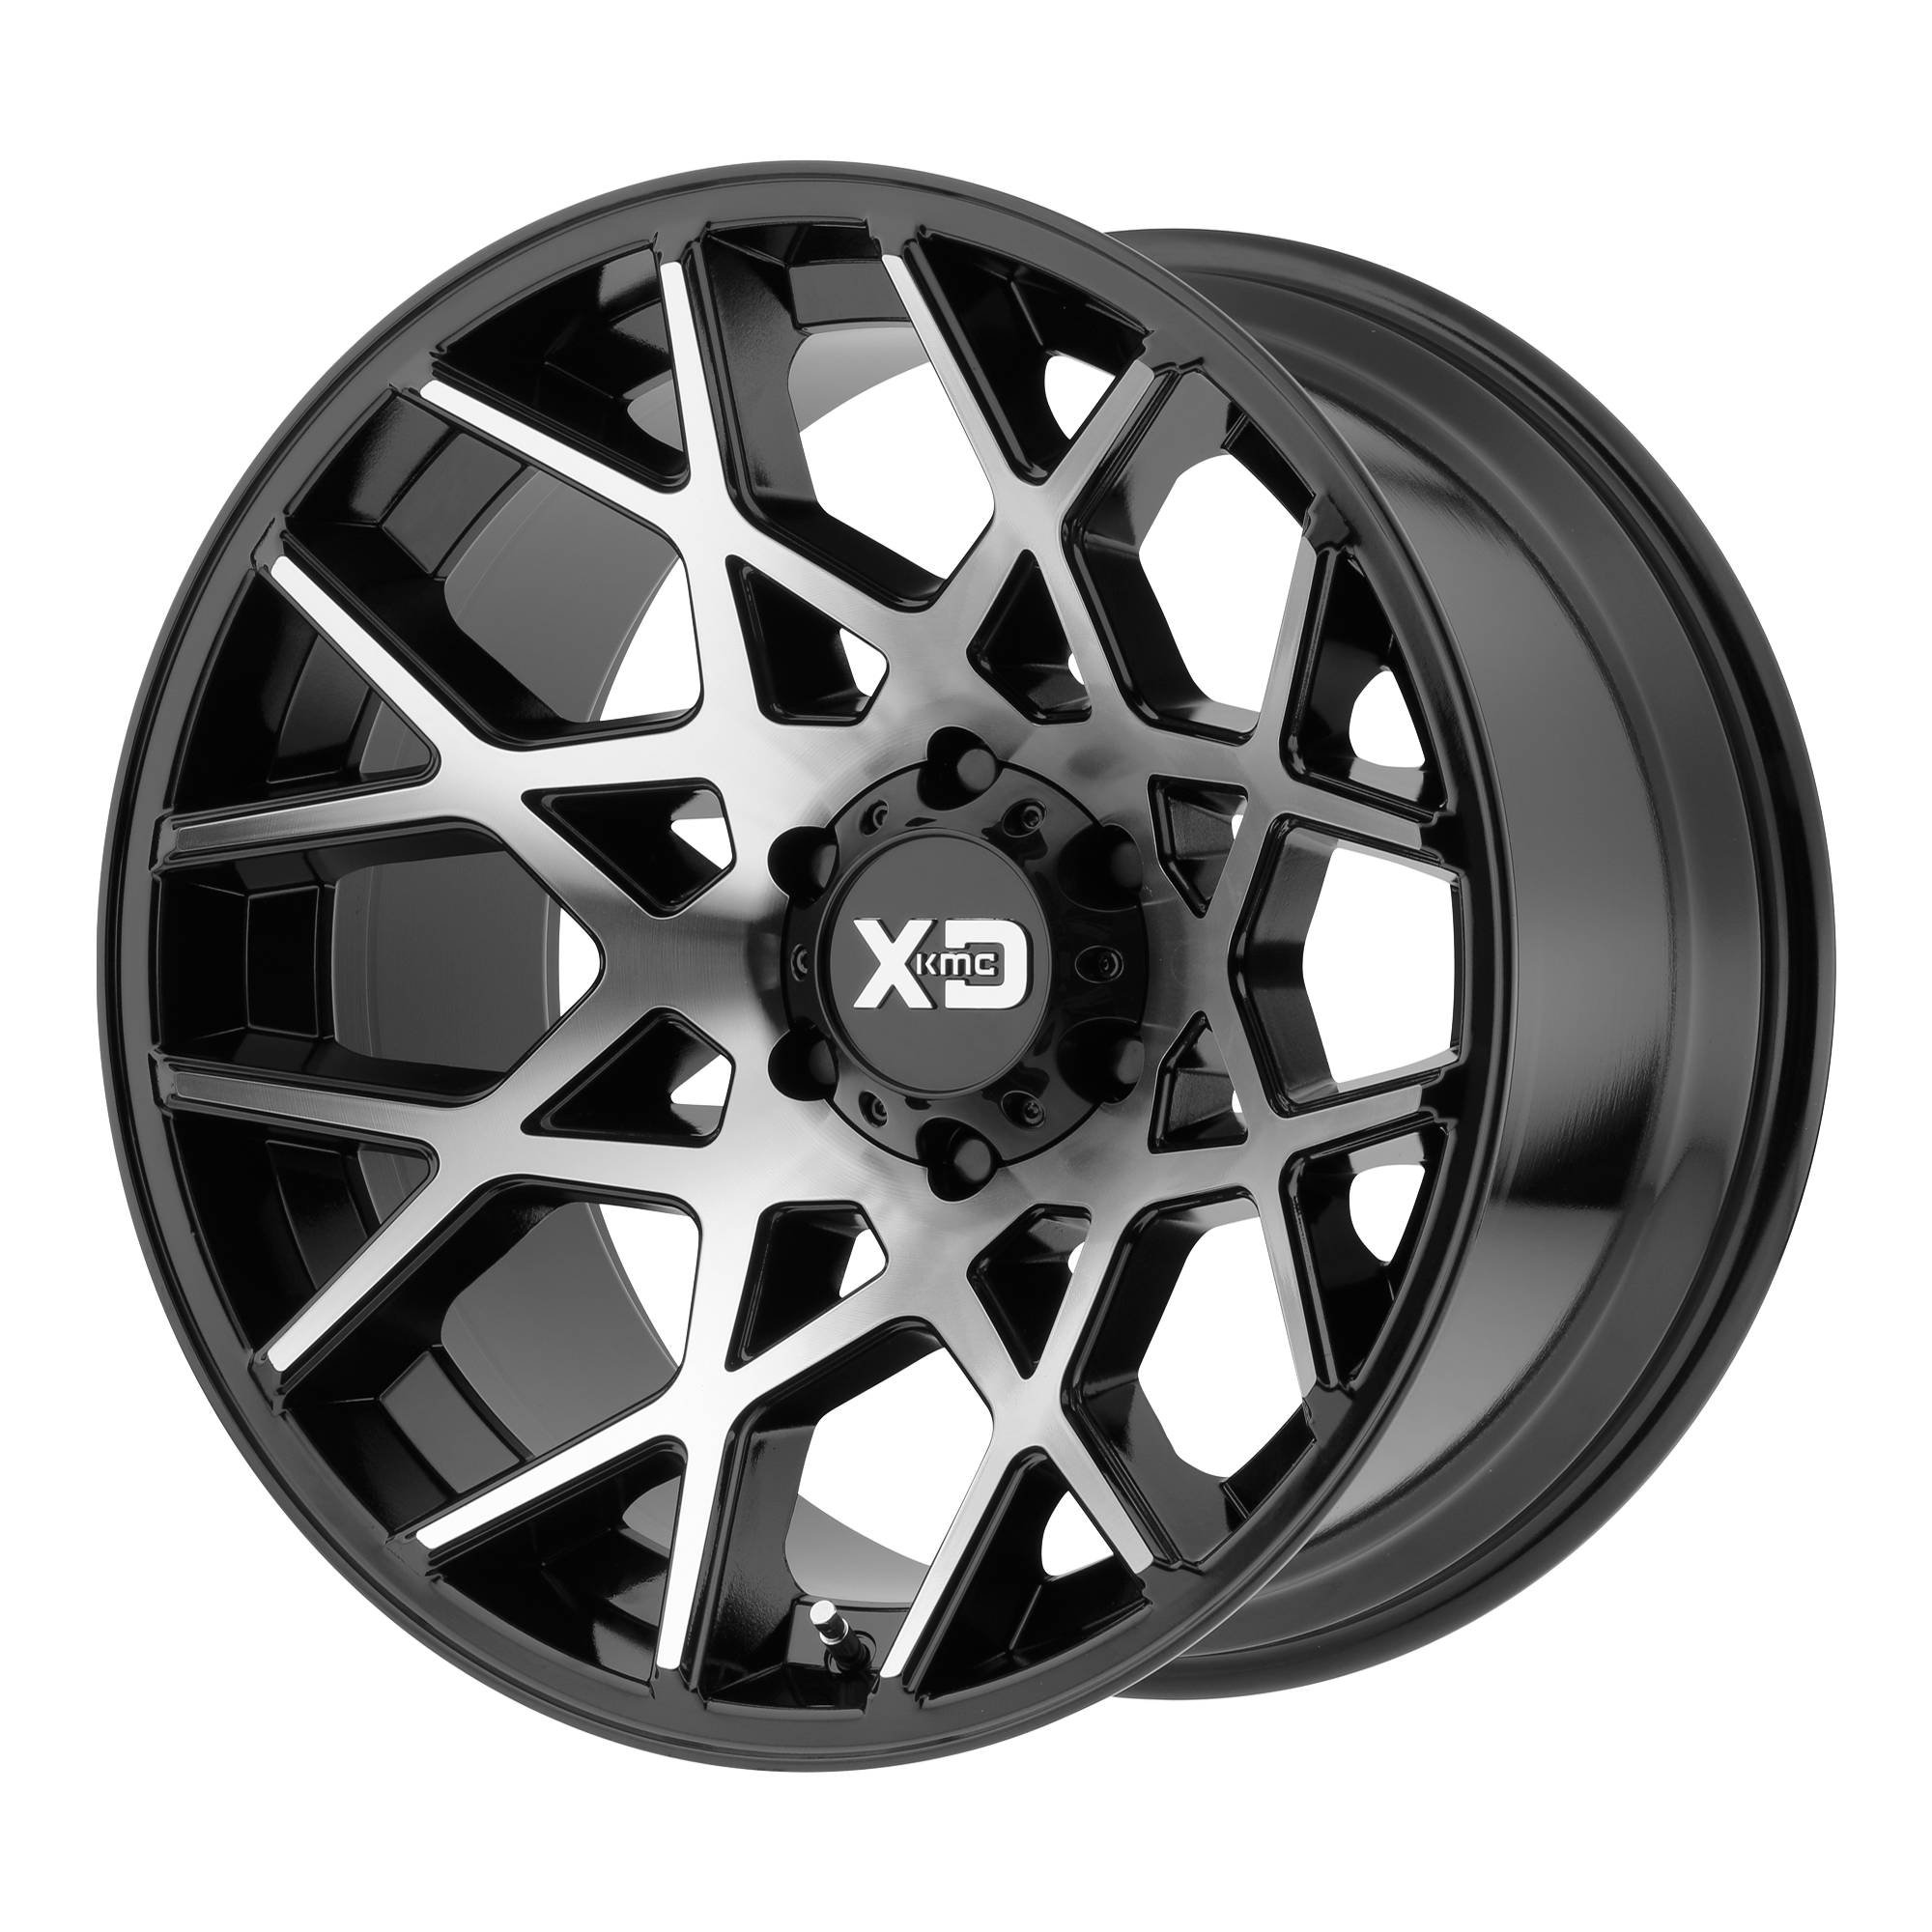 Xd колеса. KMC XD Wheels. Xd831. Диски xd811 r20. Xd85521068418n xd855 Luxe Gloss Black Machined w.